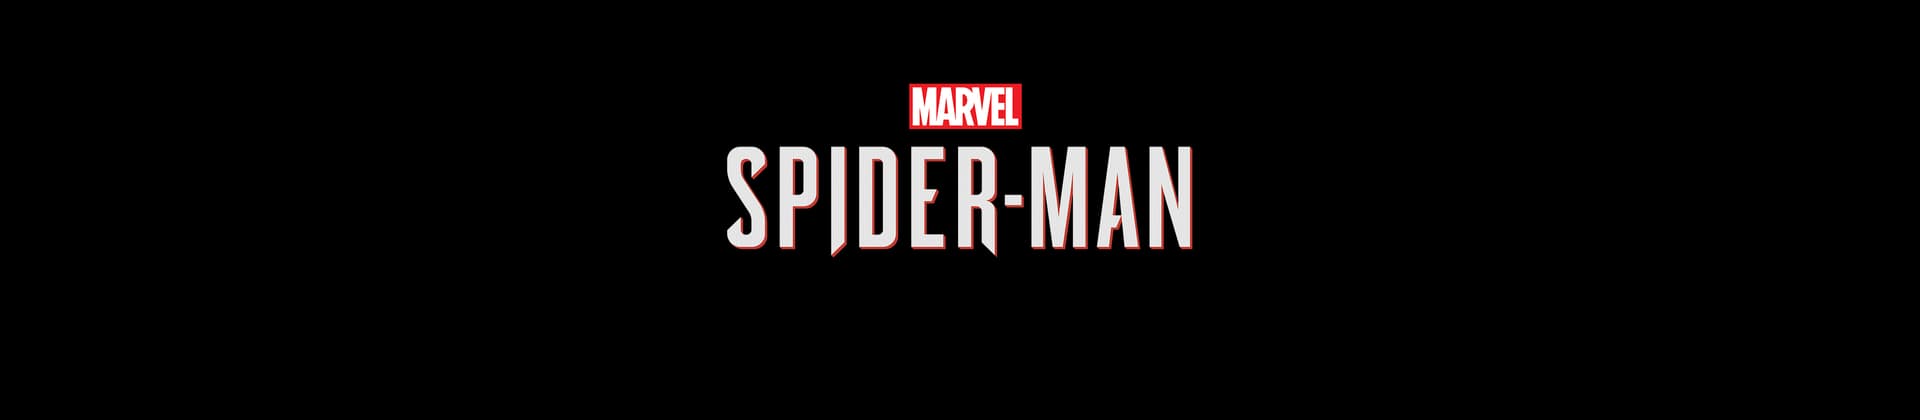 Marvel's Spider-Man Logo on Black